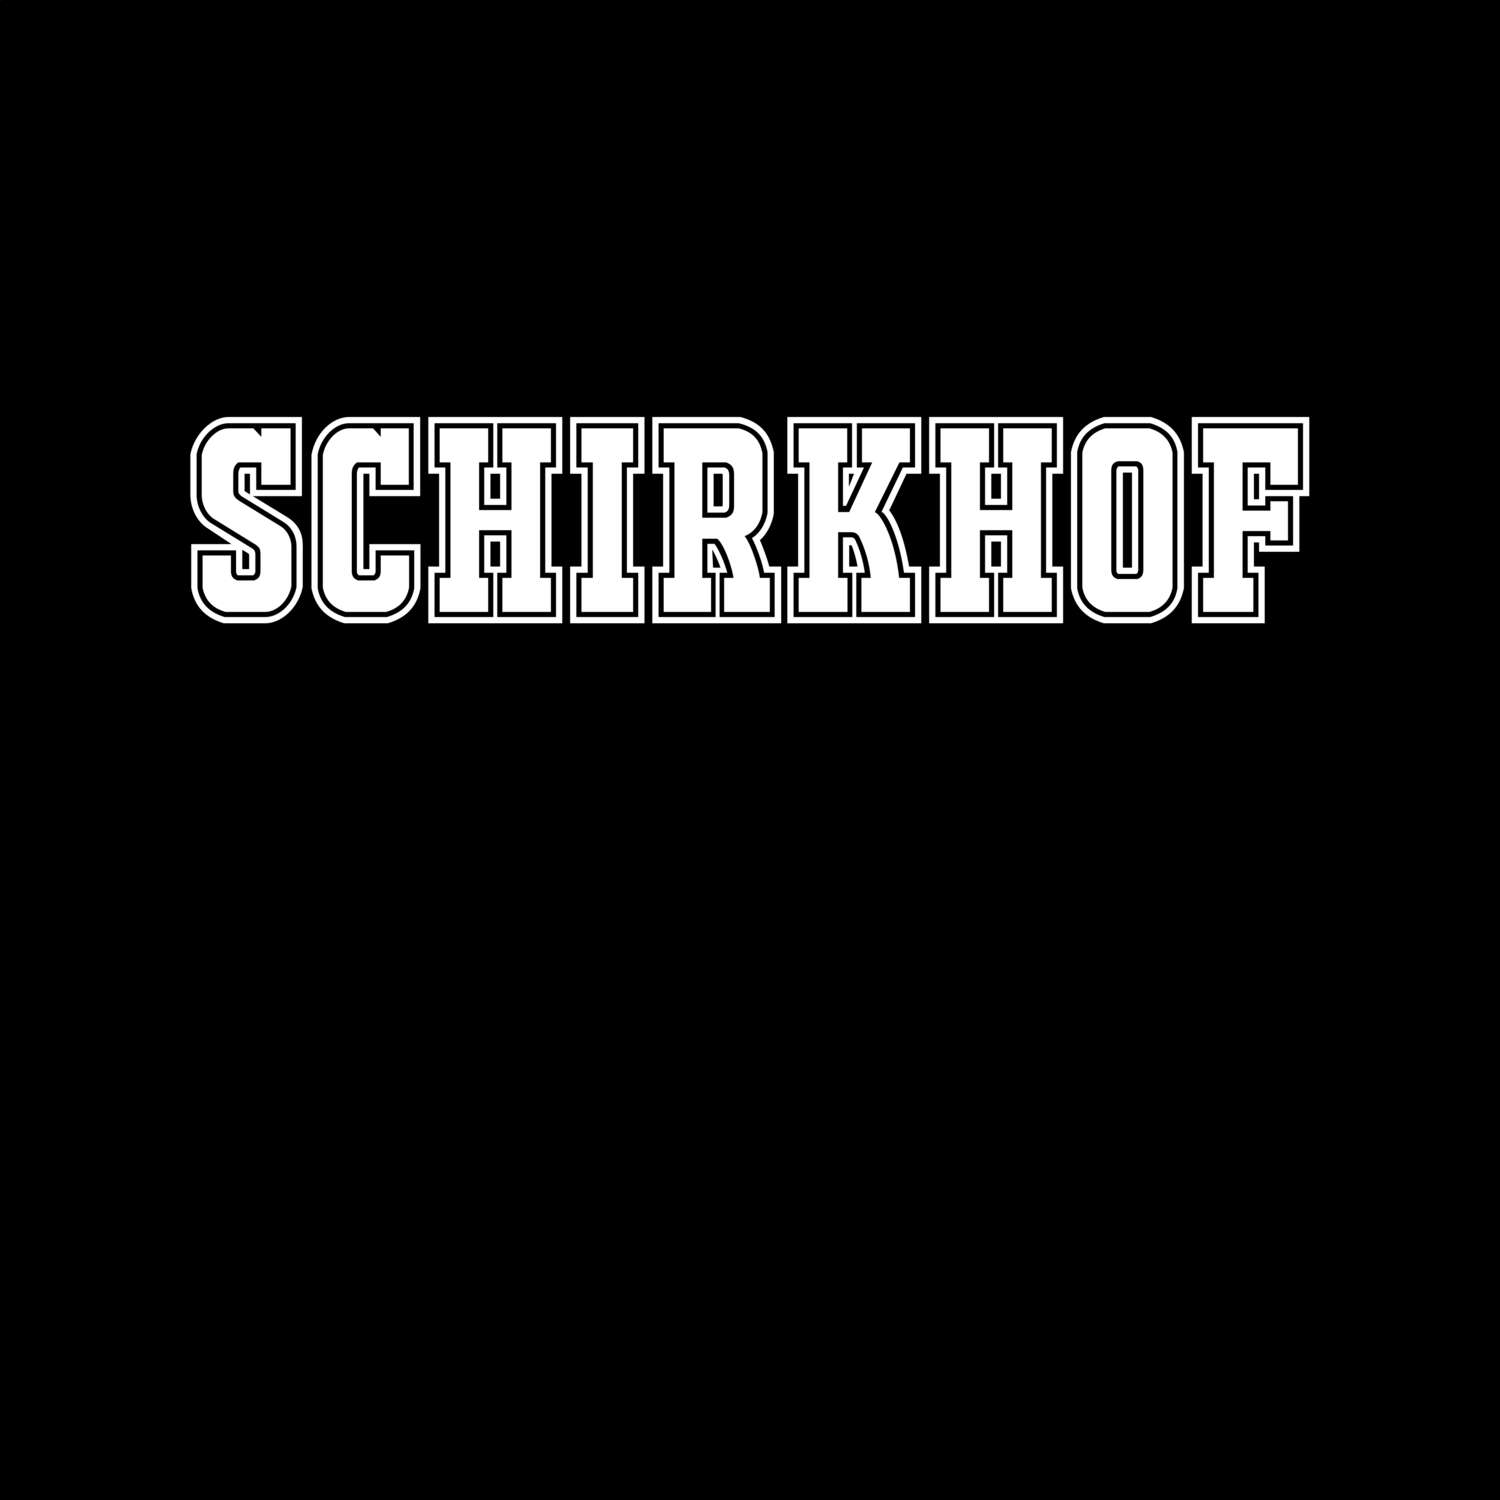 Schirkhof T-Shirt »Classic«